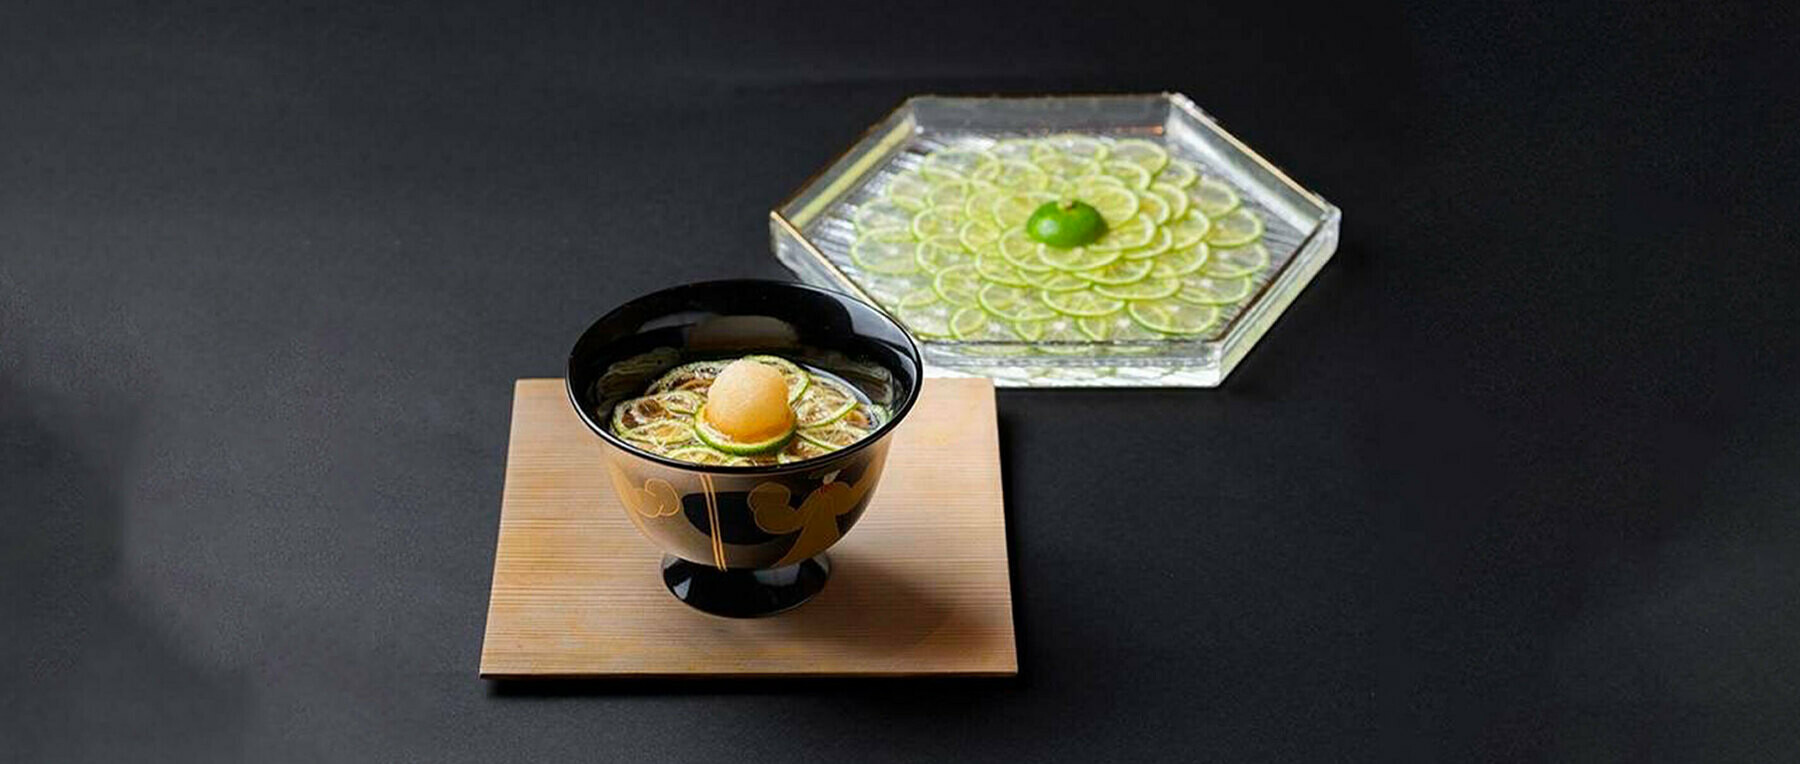 Japanese Cuisine Ensui's images6